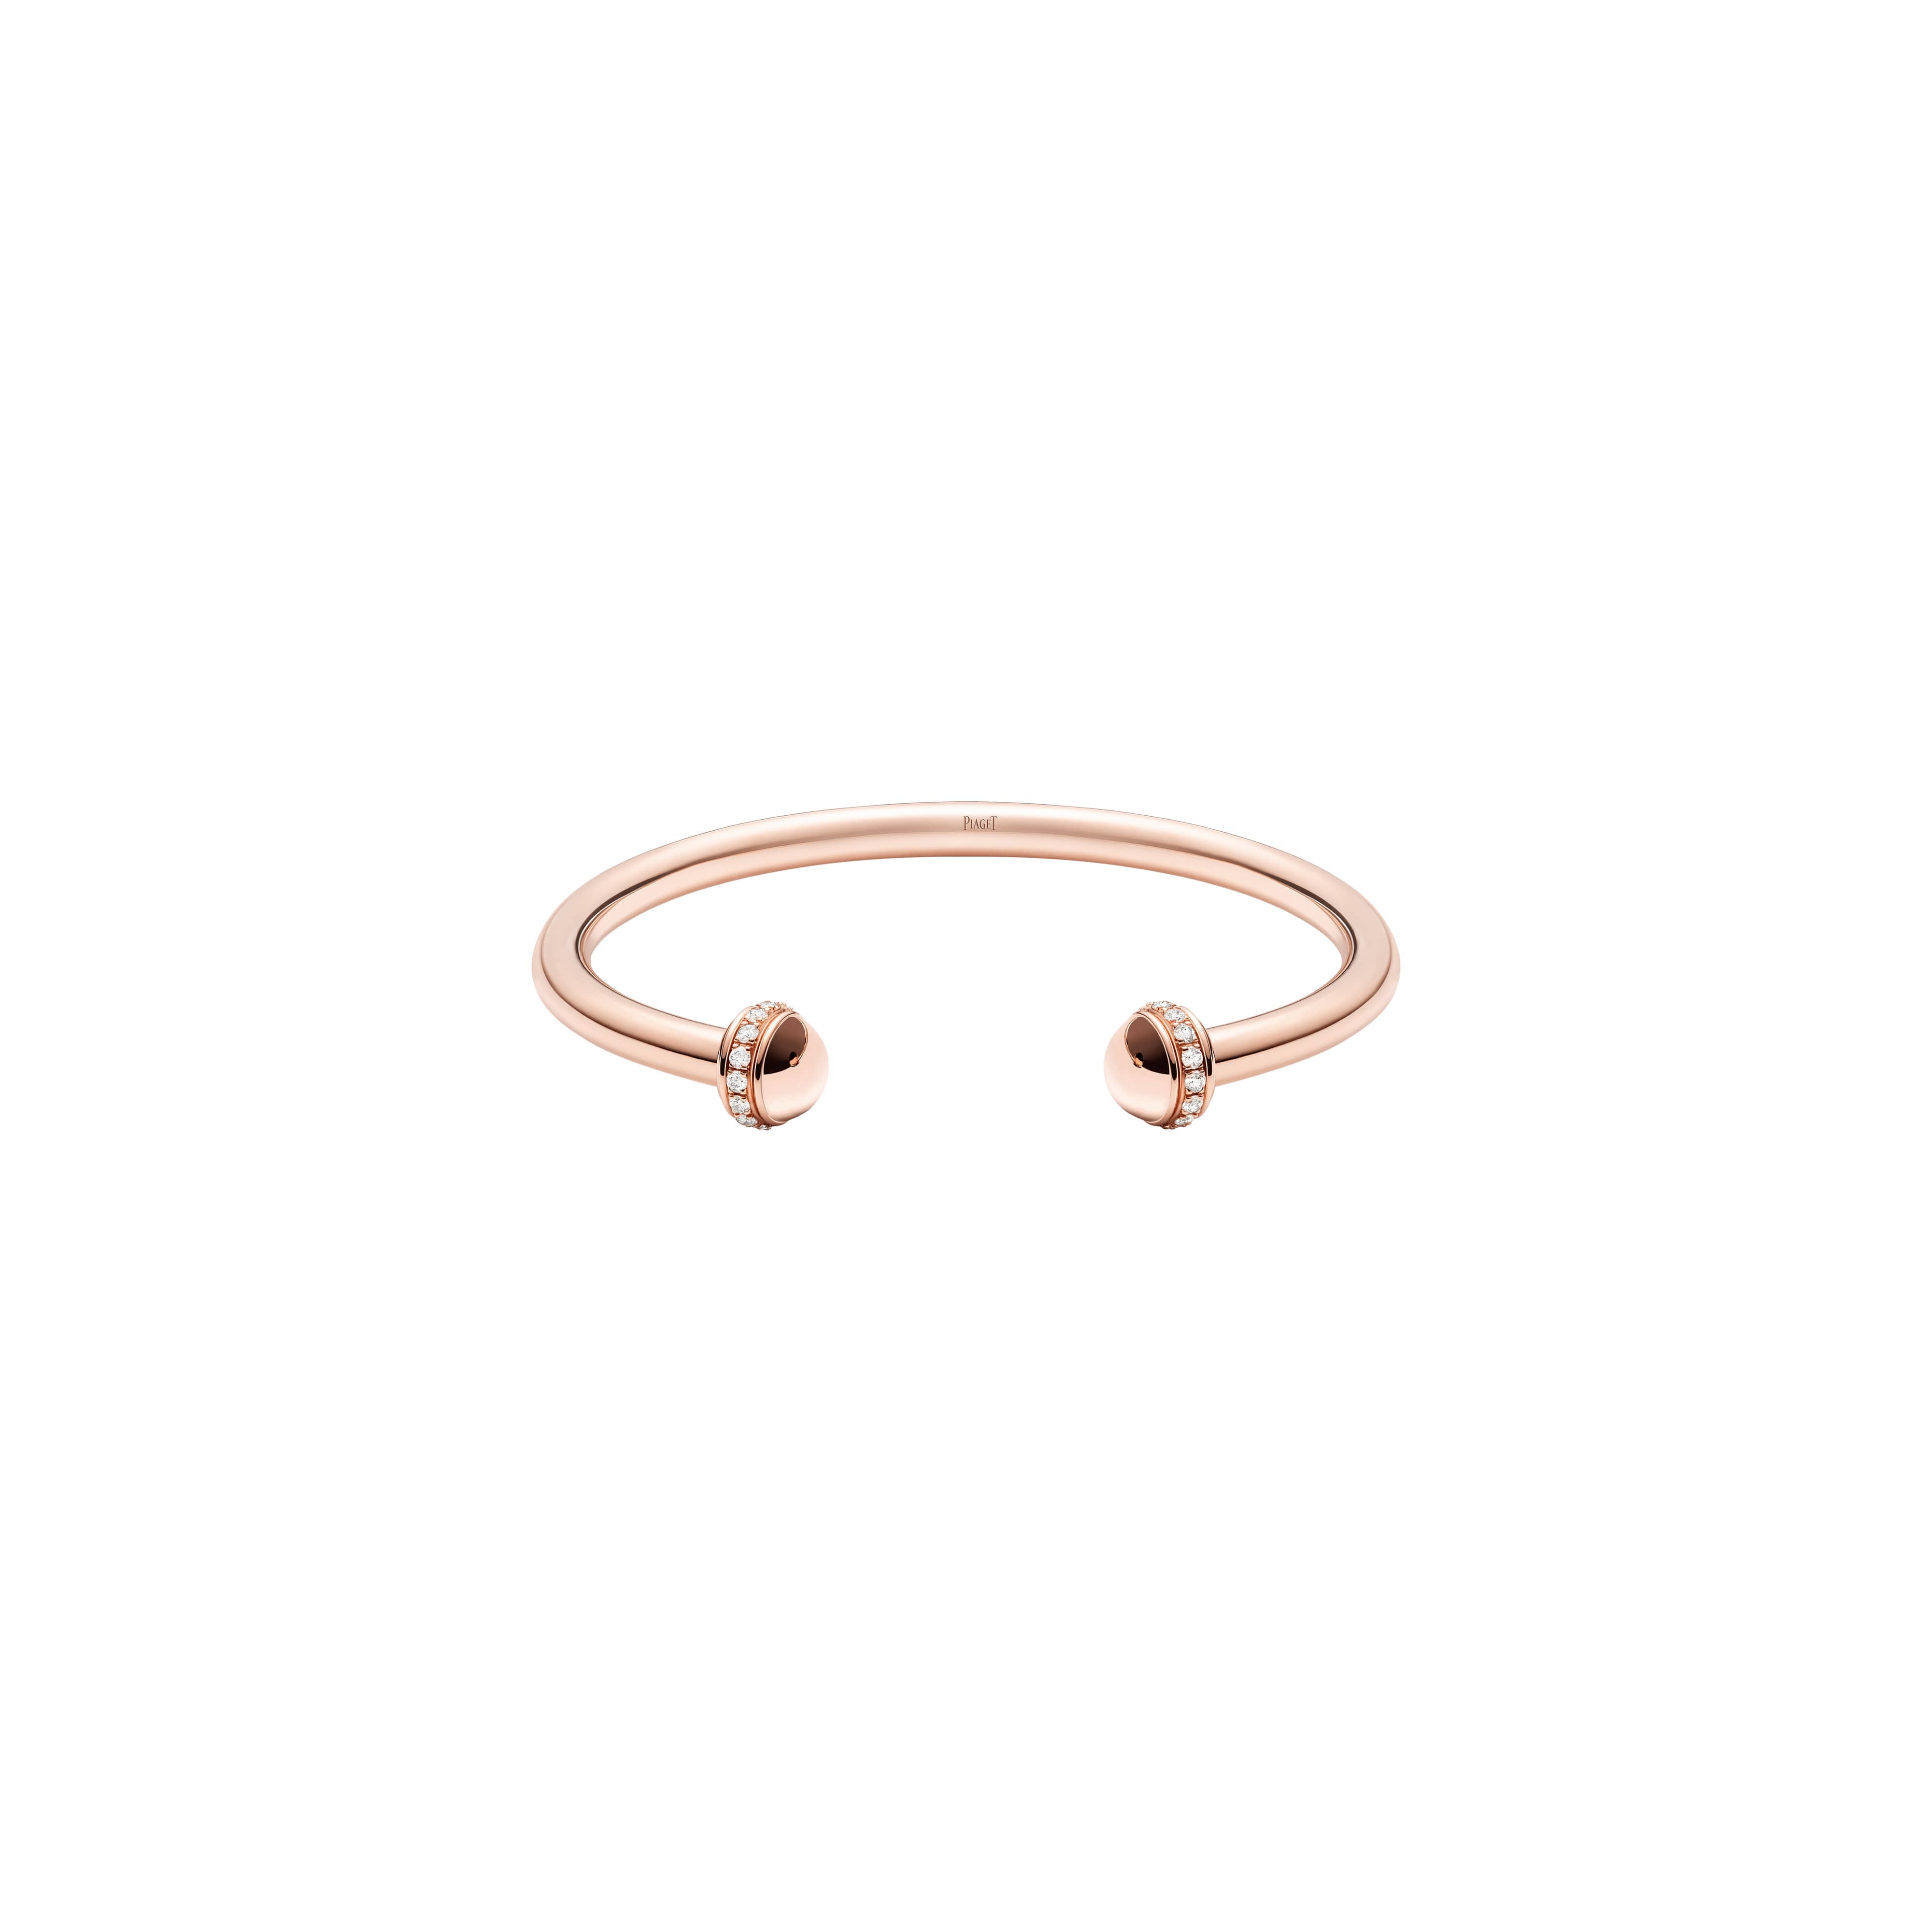 Rose gold Diamond open bangle bracelet G36PZ900 - Piaget Luxury Jewelry ...